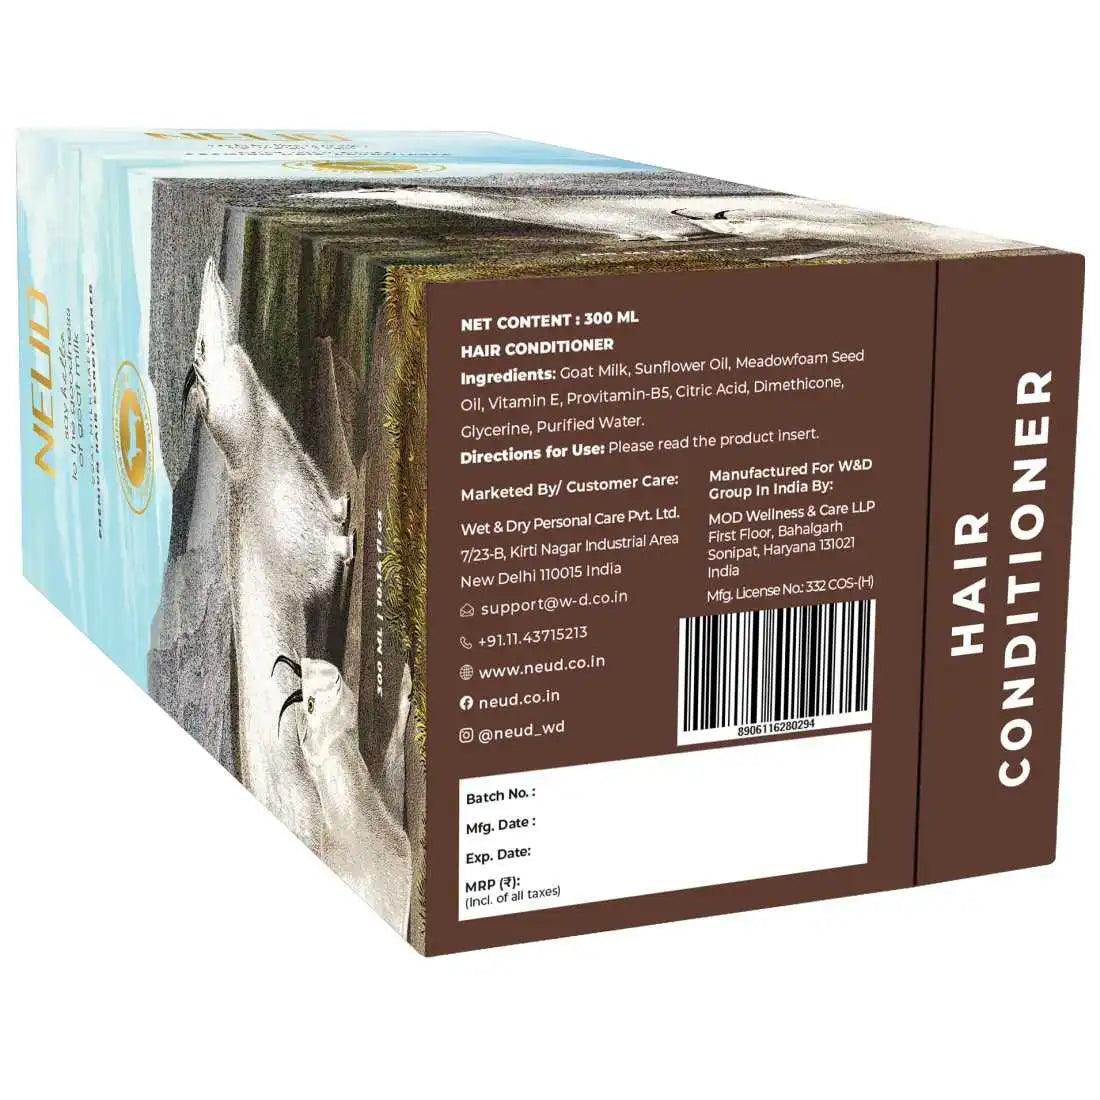 NEUD Goat Milk Volumizing Hair Conditioner 300 ml for Men and Women is Shipped Worldwide -  everteen-neud.com